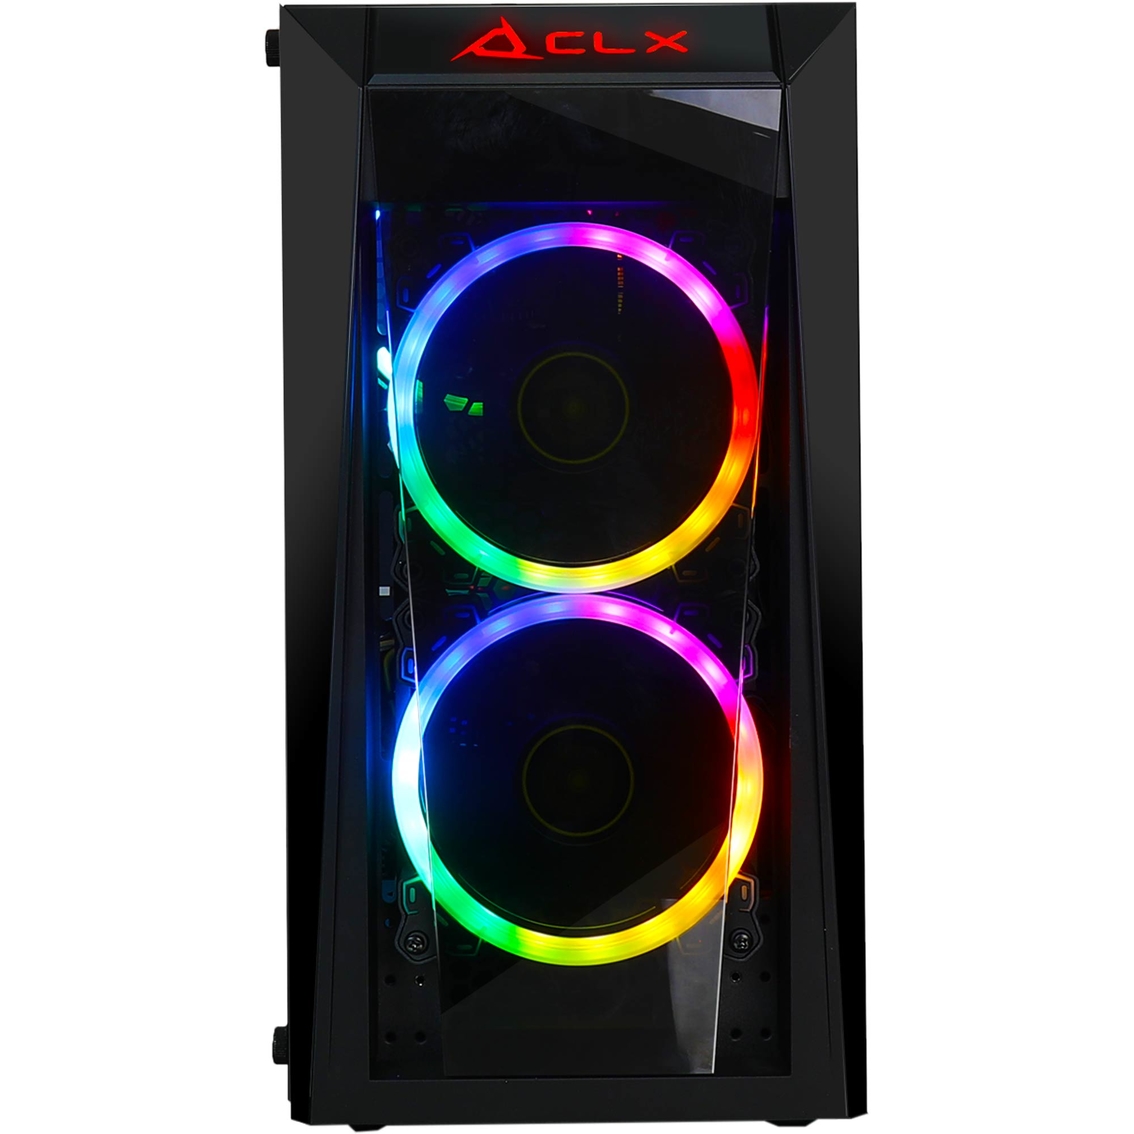 CLX SET VR-Ready AMD Ryzen 7 3.9GHz 16GB RAM 960GB SSD Gaming Desktop - Image 2 of 7